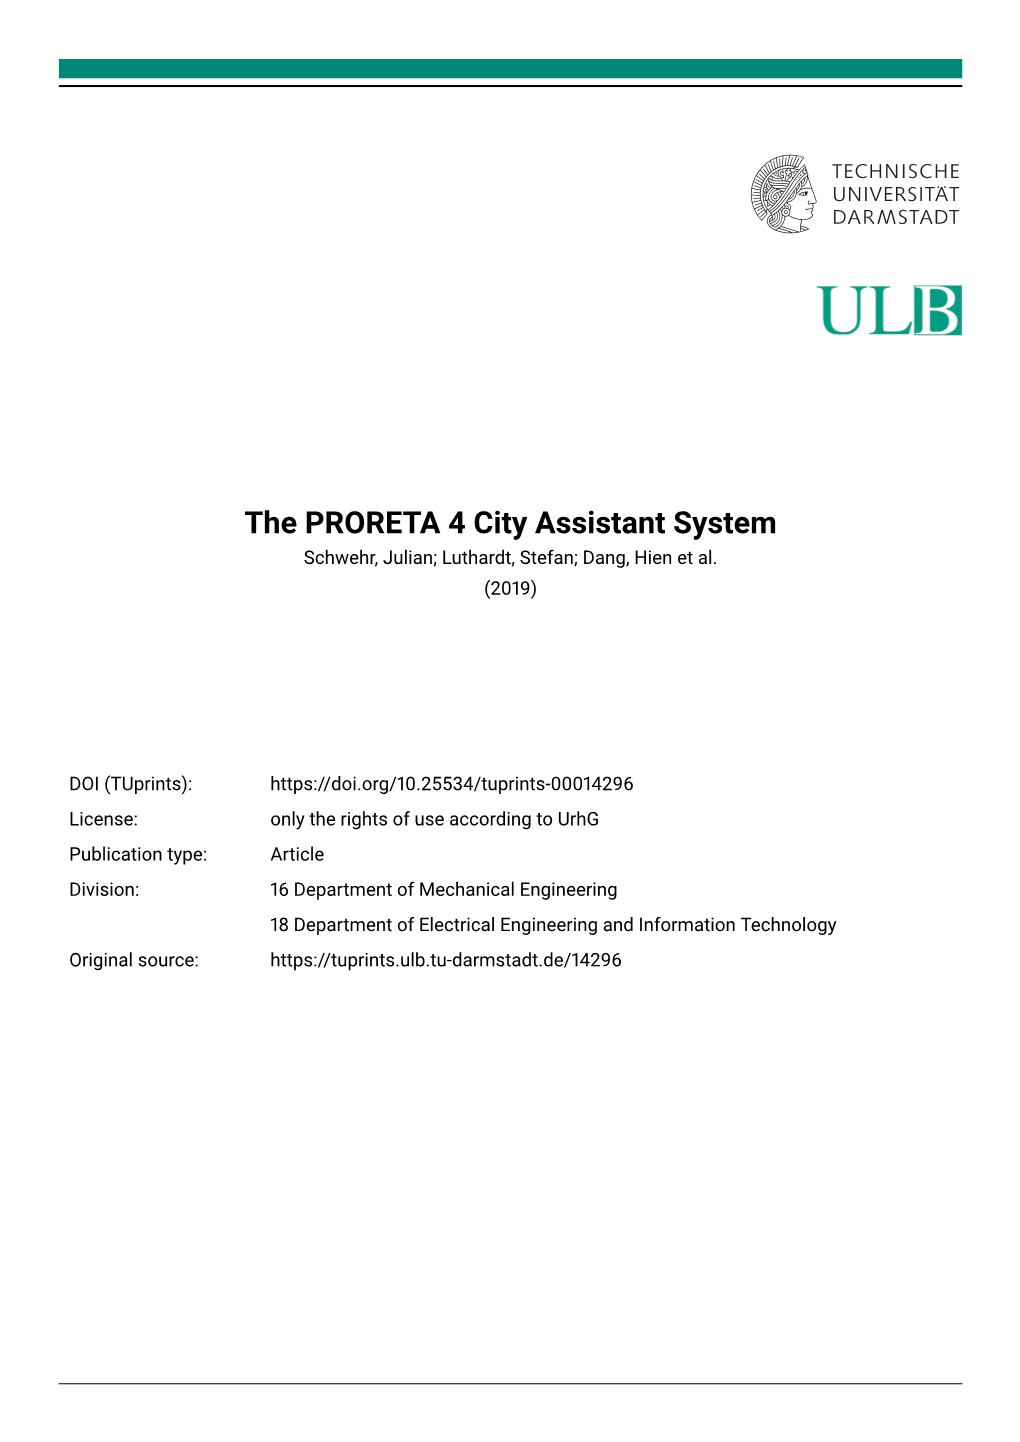 The PRORETA 4 City Assistant System Schwehr, Julian; Luthardt, Stefan; Dang, Hien Et Al